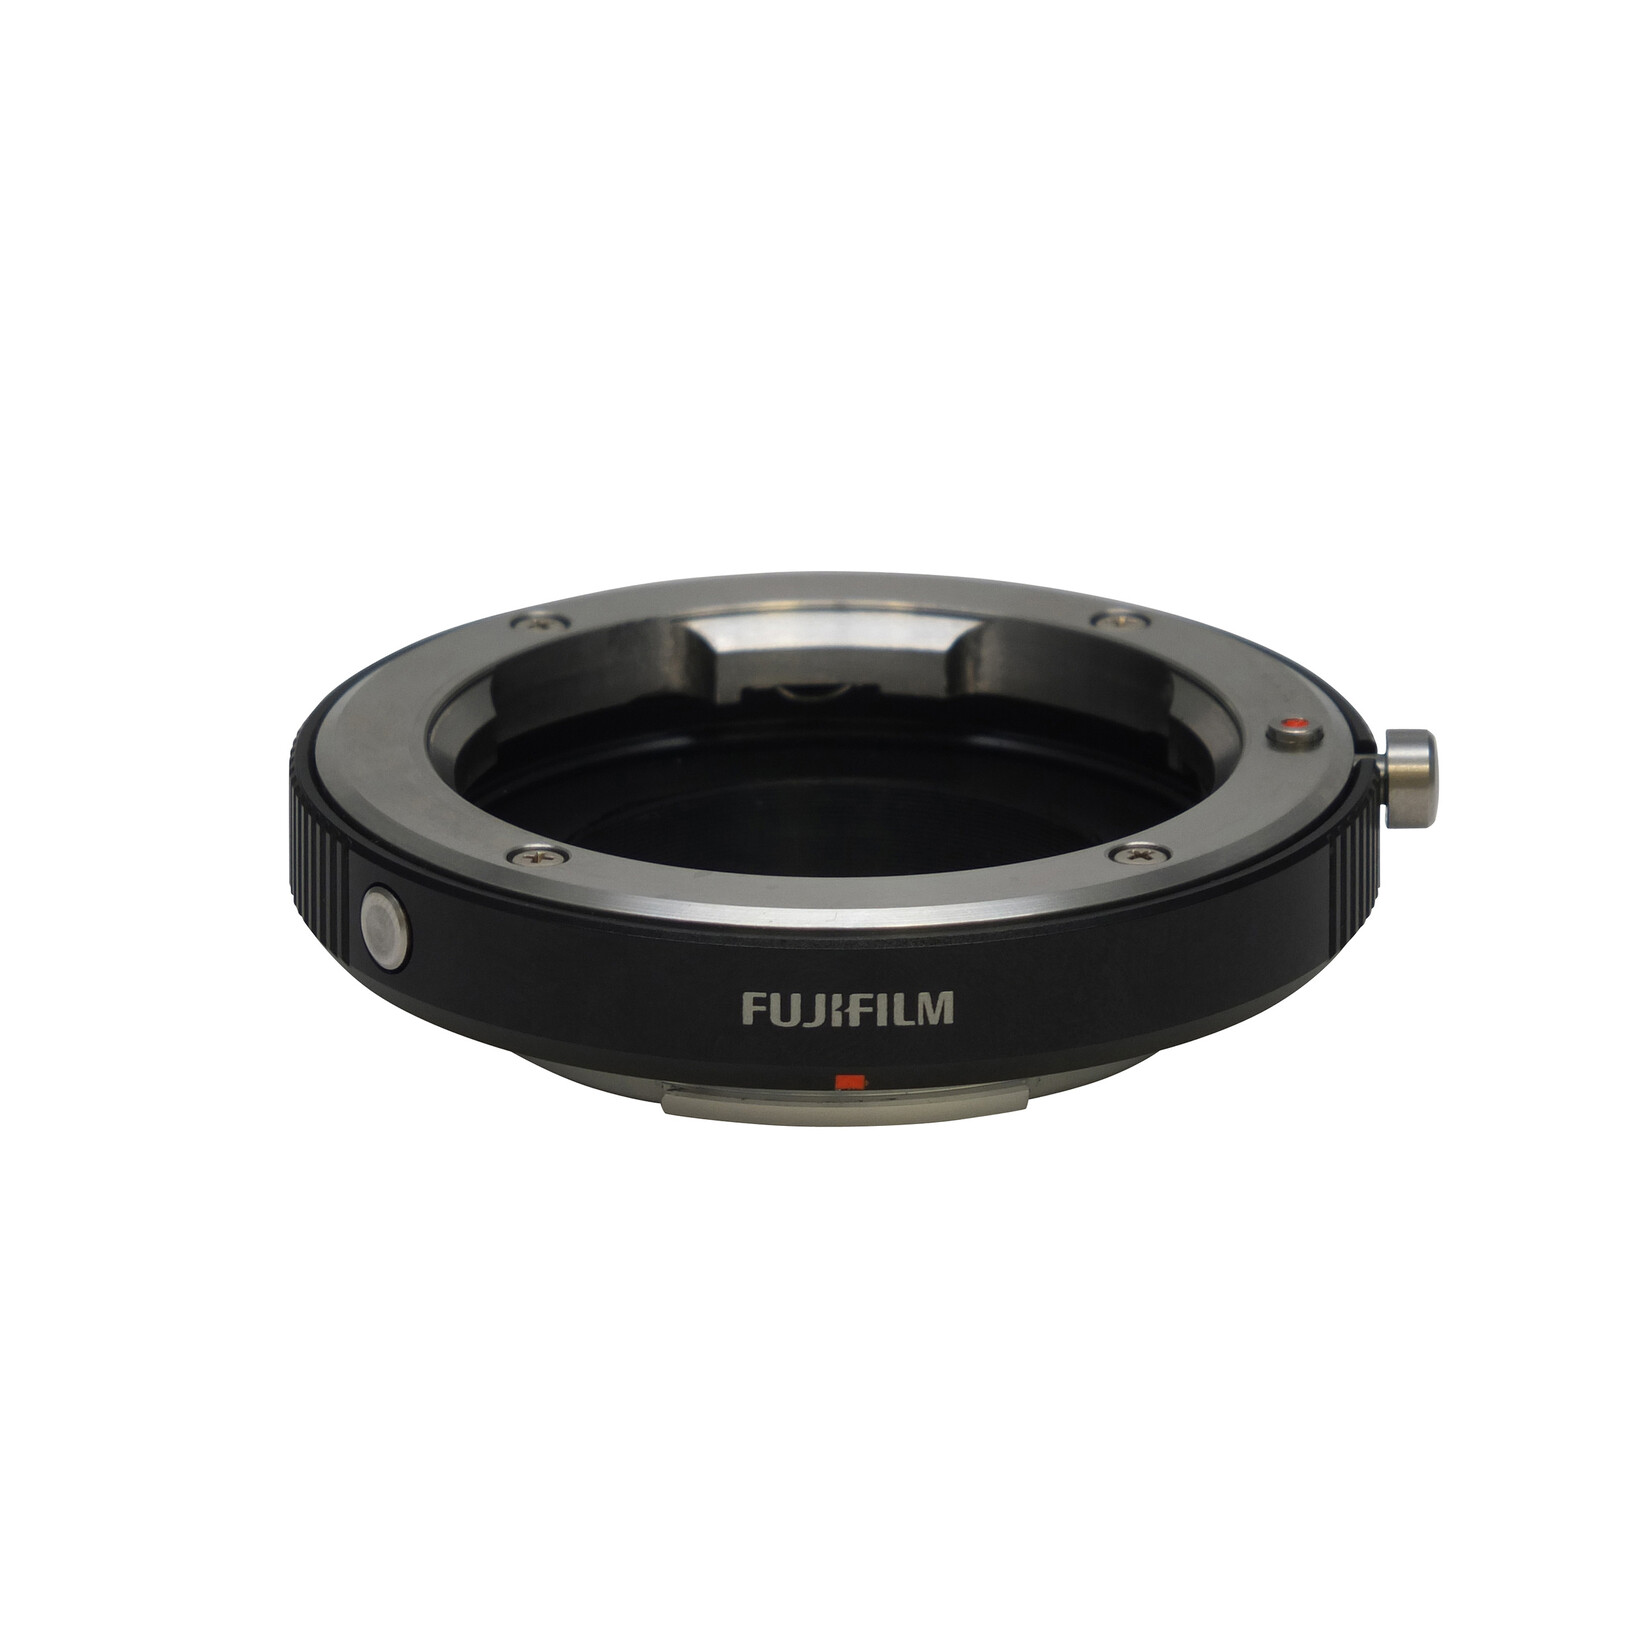 Fujifilm FUJIFILM M Mount Adapter for X-Mount Cameras (Used)